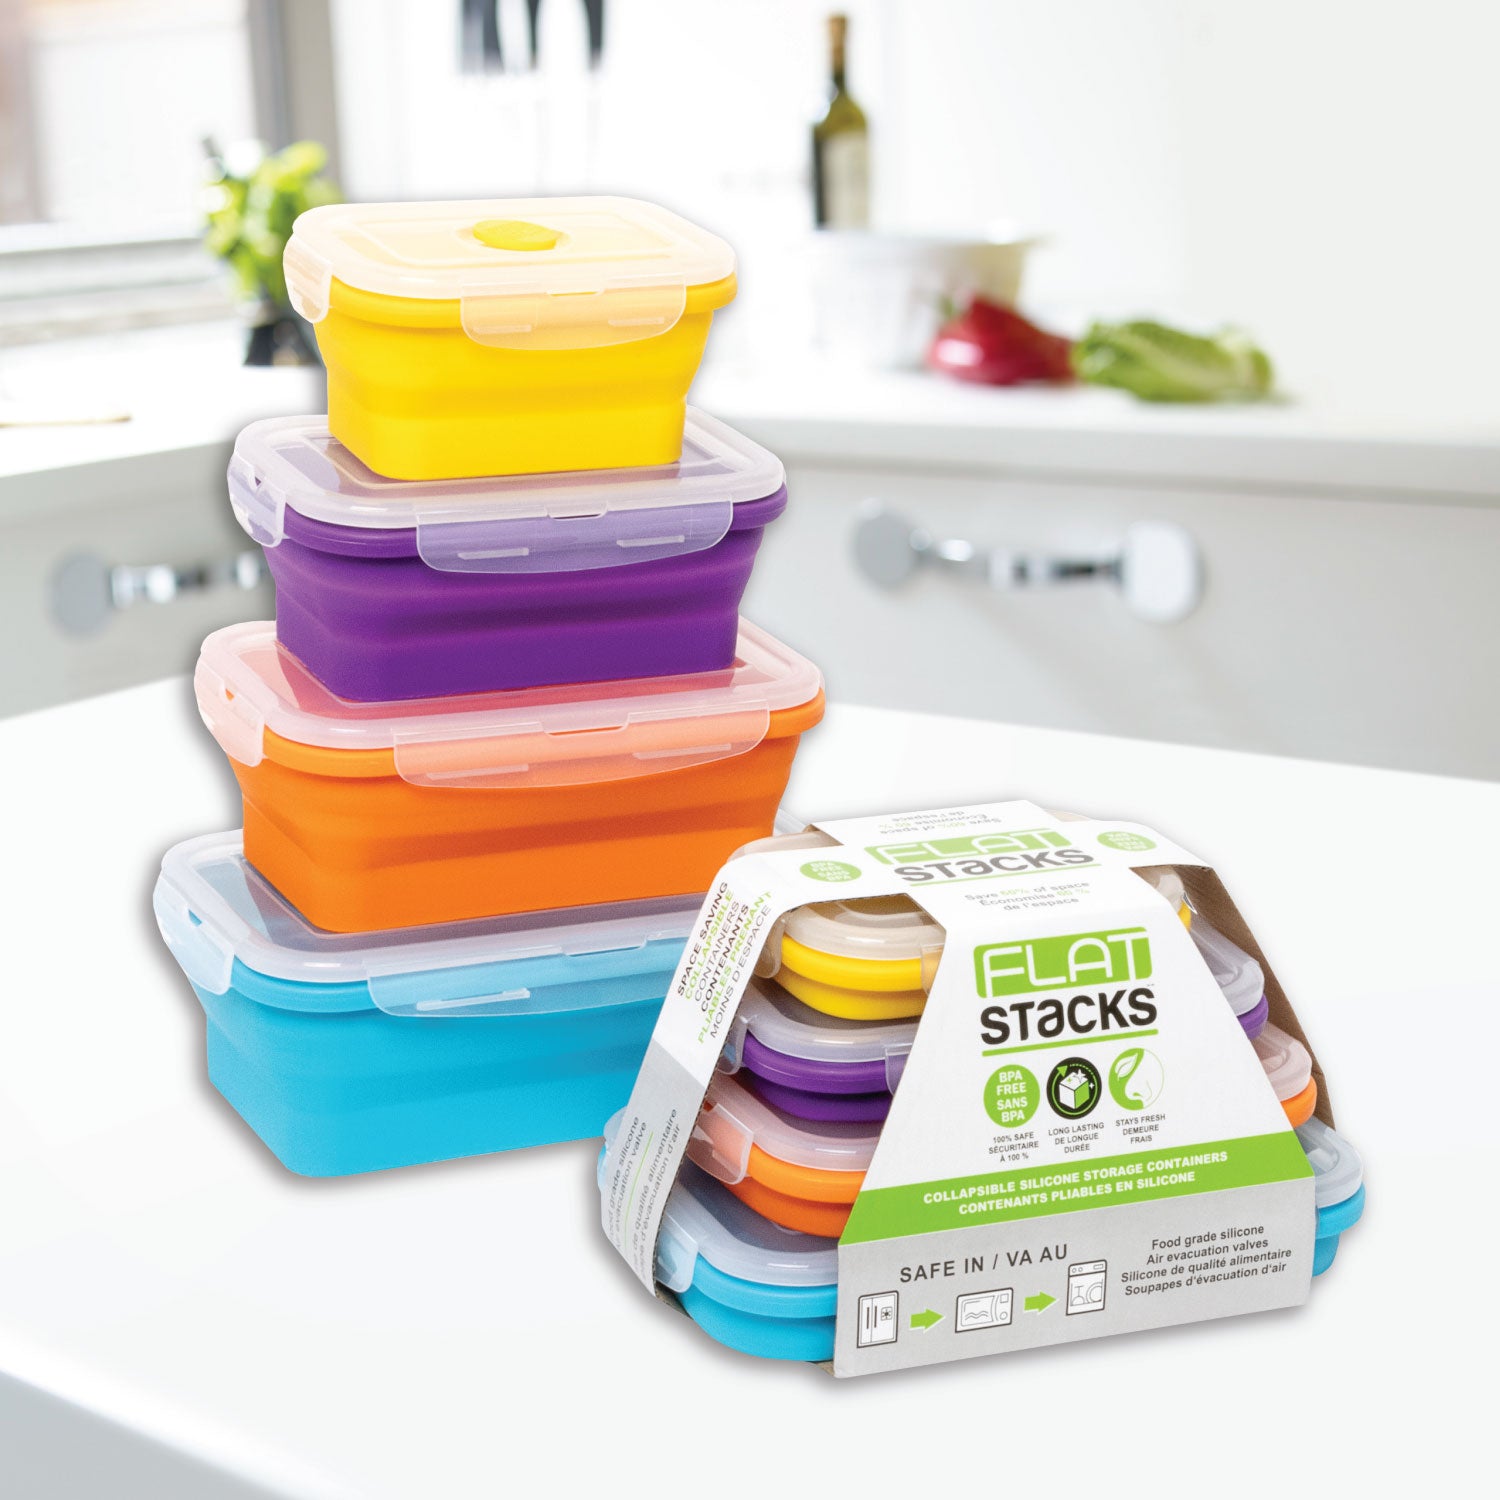 Handy Gourmet Flexi-Top Reusable Containers, BPA Free - Rectangle, Set of 3